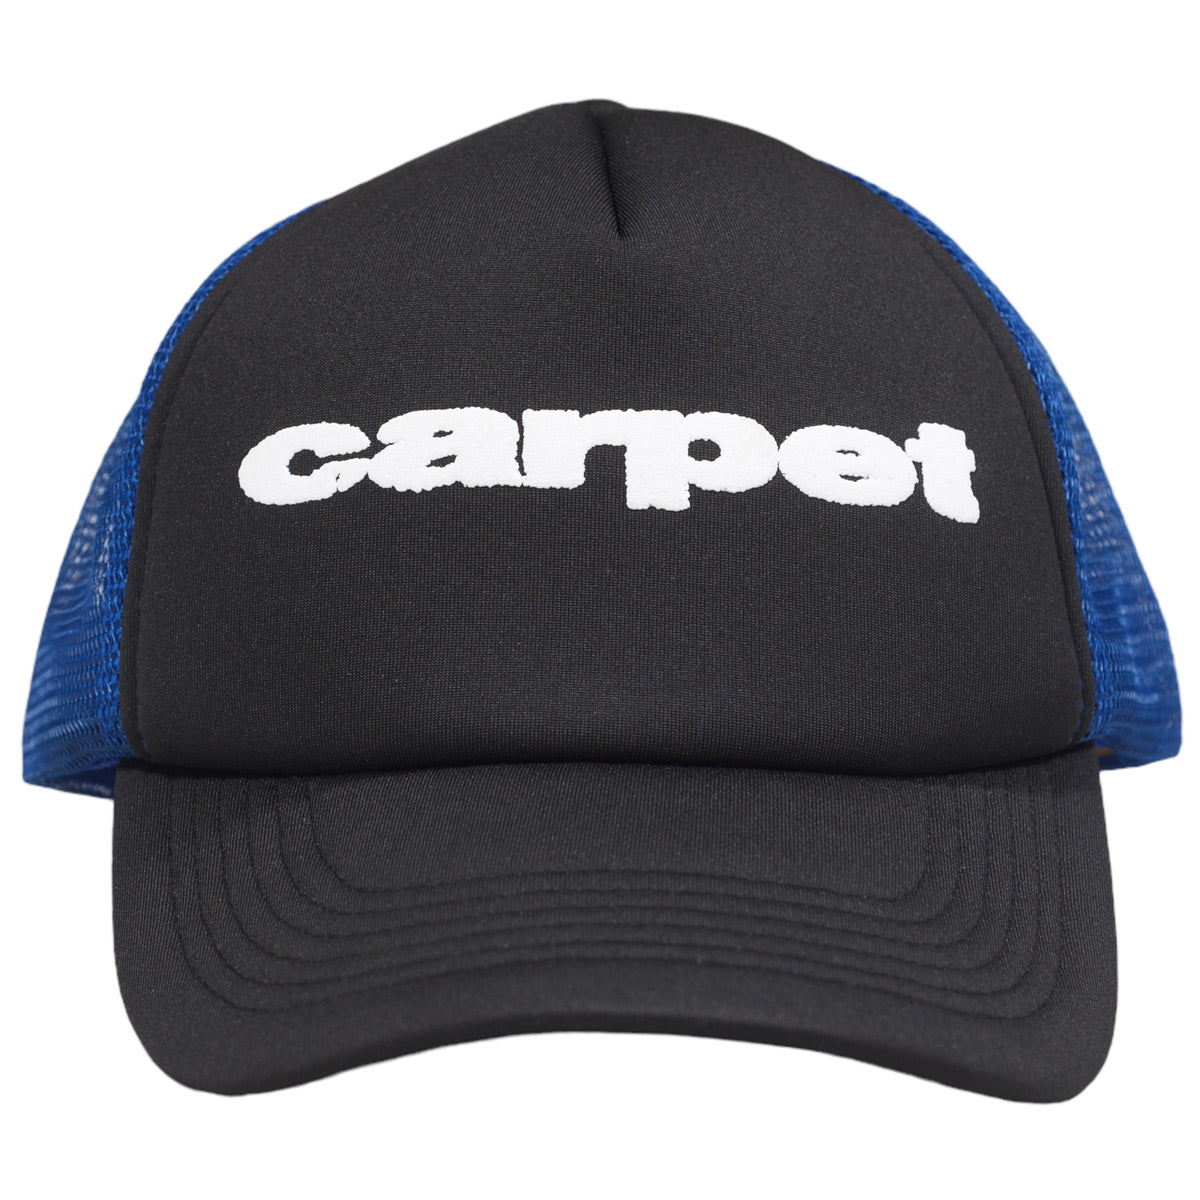 Carpet Company Carpet Puff Trucker Hat - Black/Blue image 3